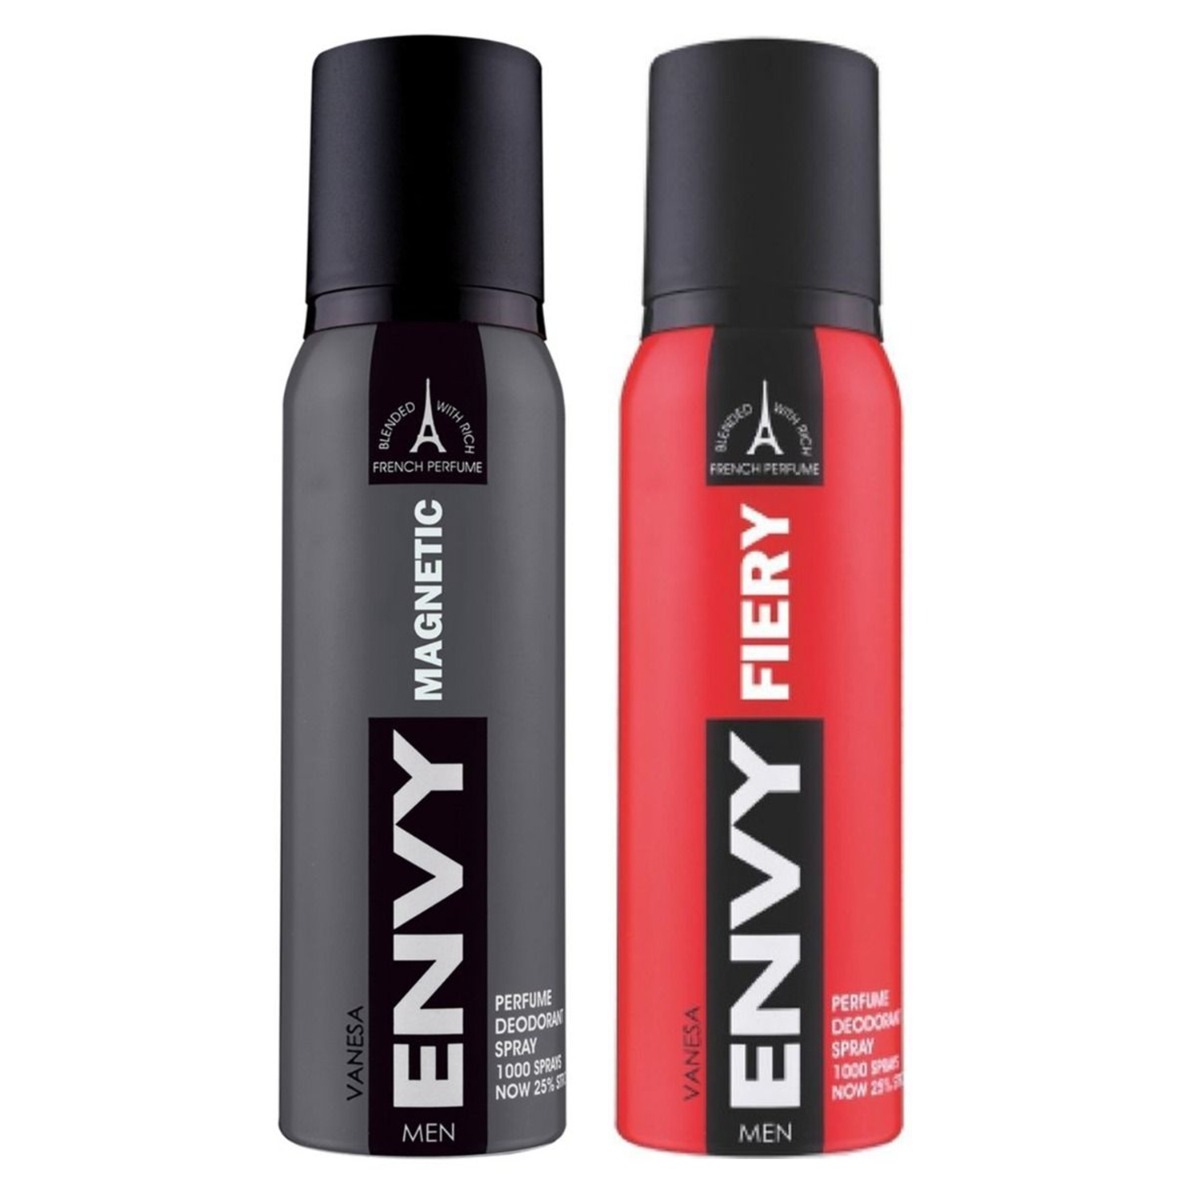 Envy Fiery & Magnetic Perfume Spray Deodorant for Men, 120ml Each